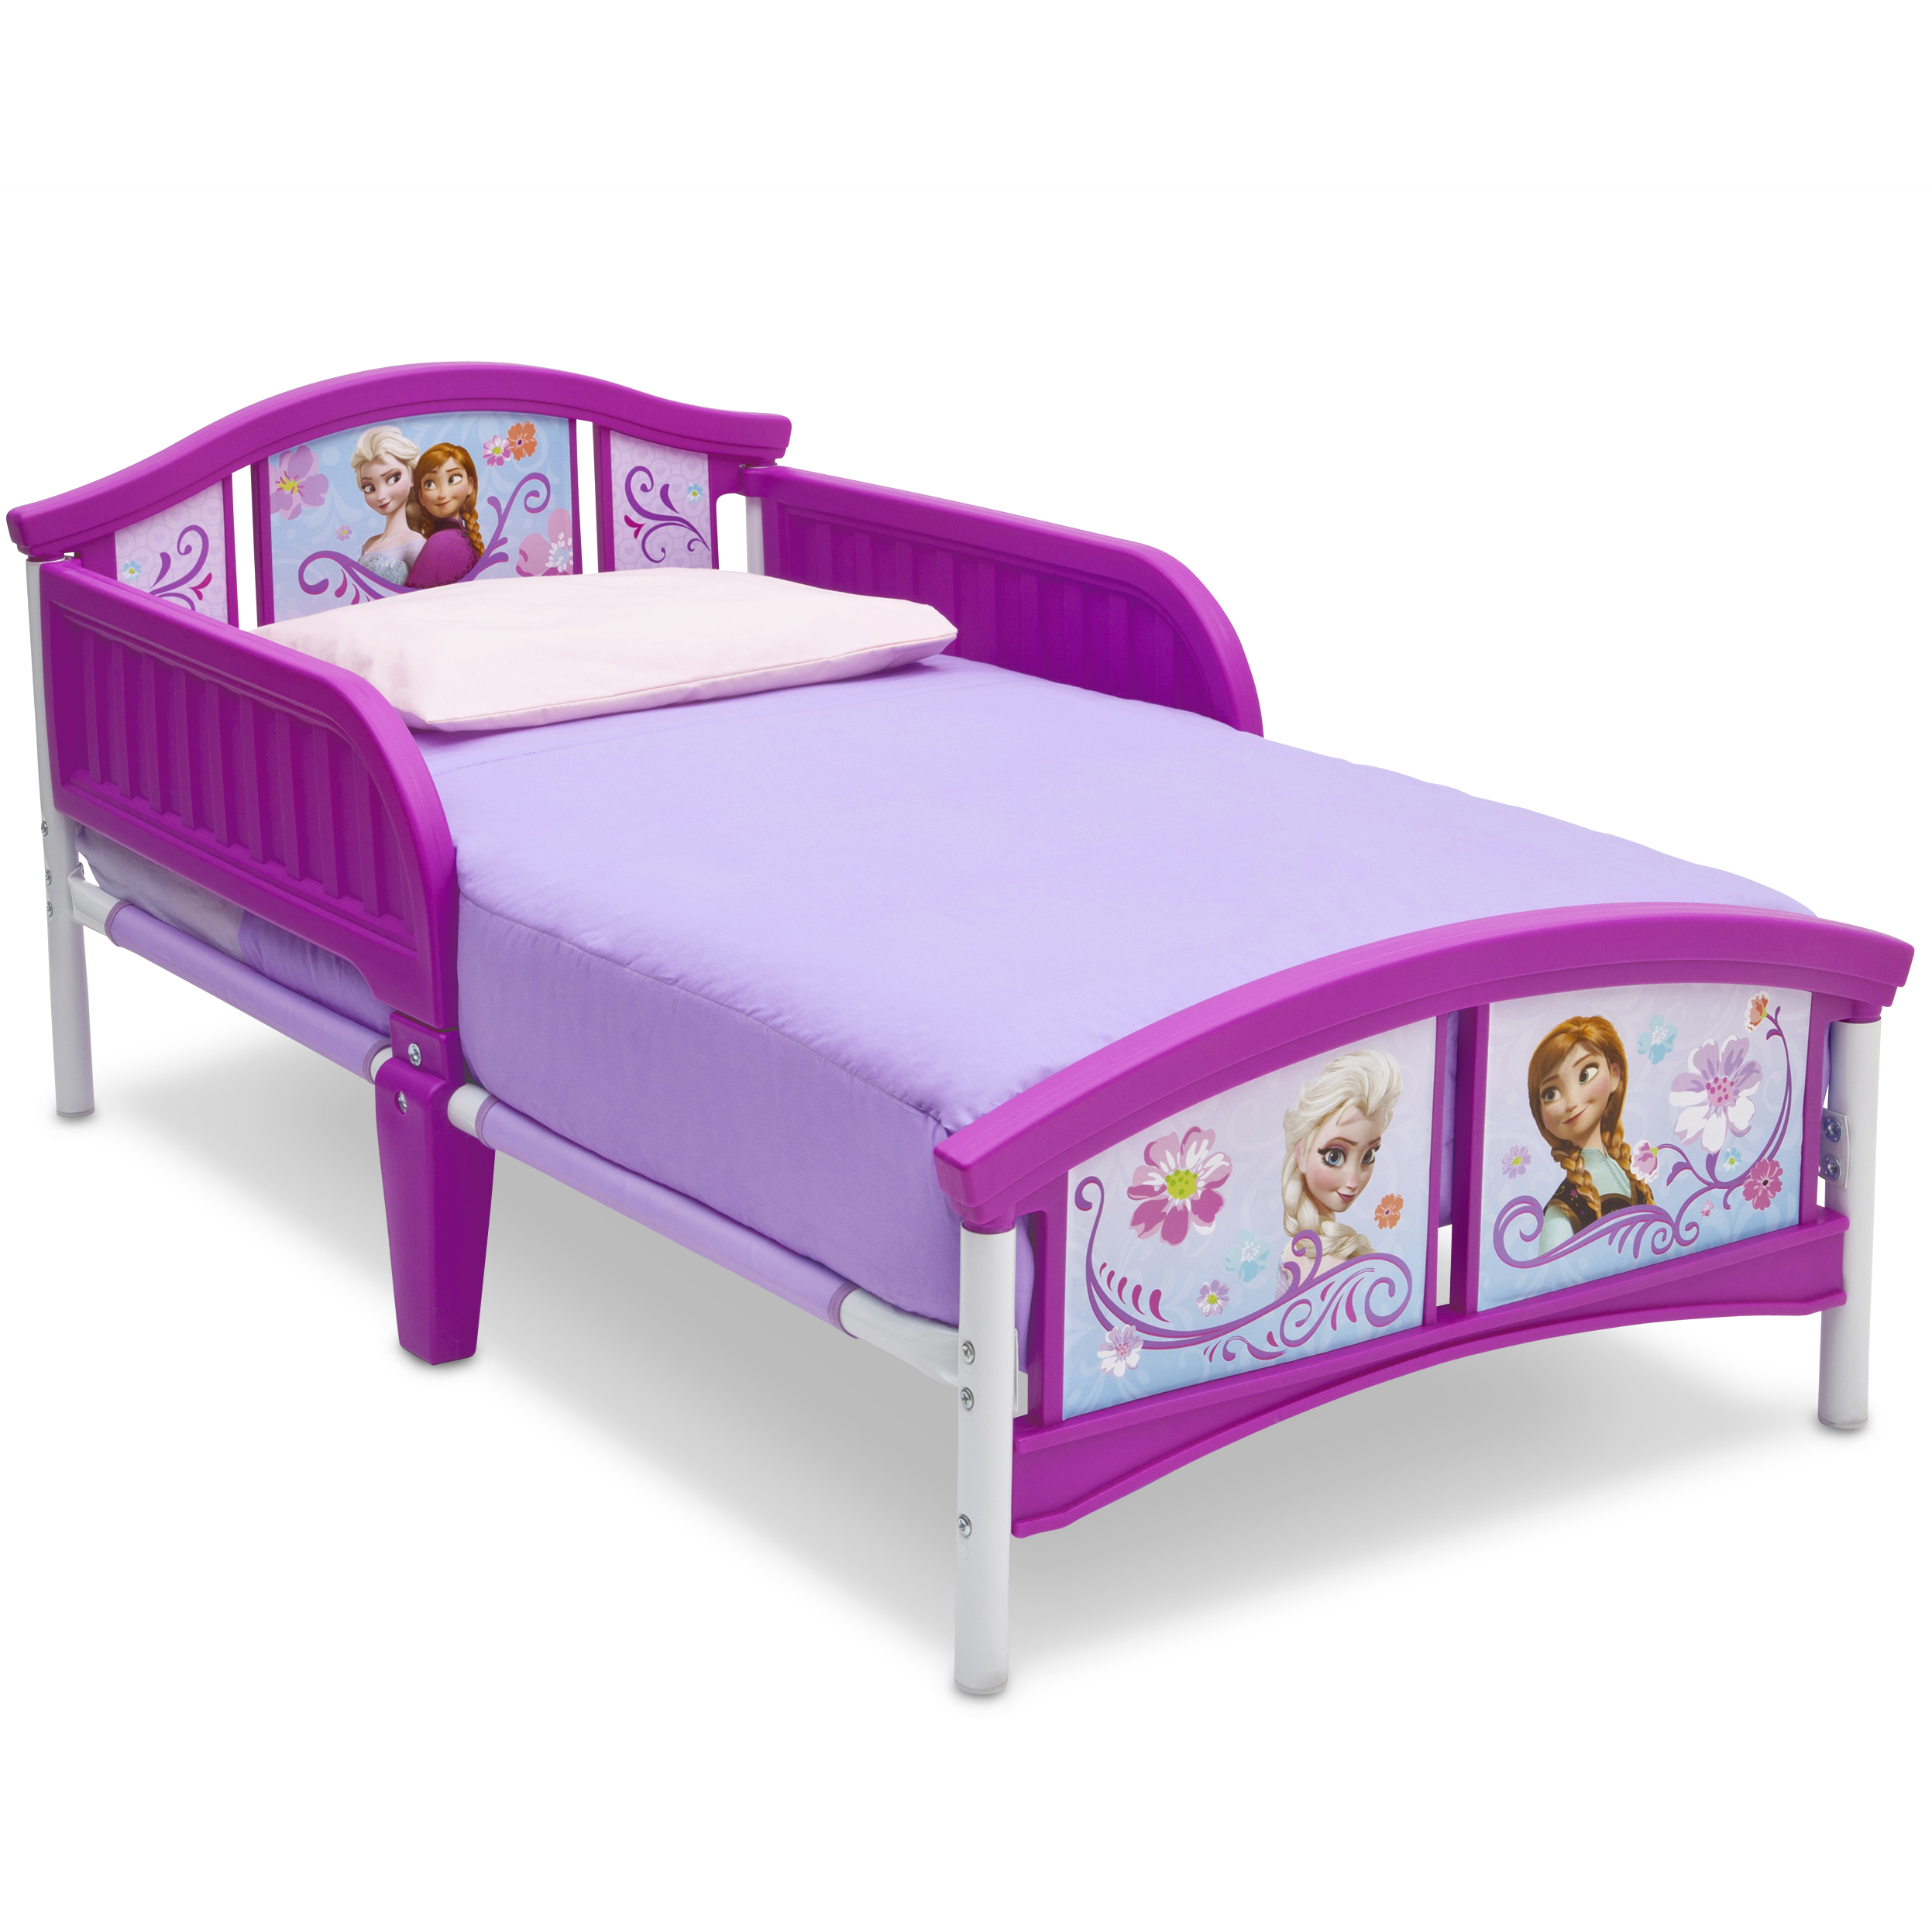 Delta Children Disney Frozen Plastic Toddler Bed, Purple - image 1 of 6